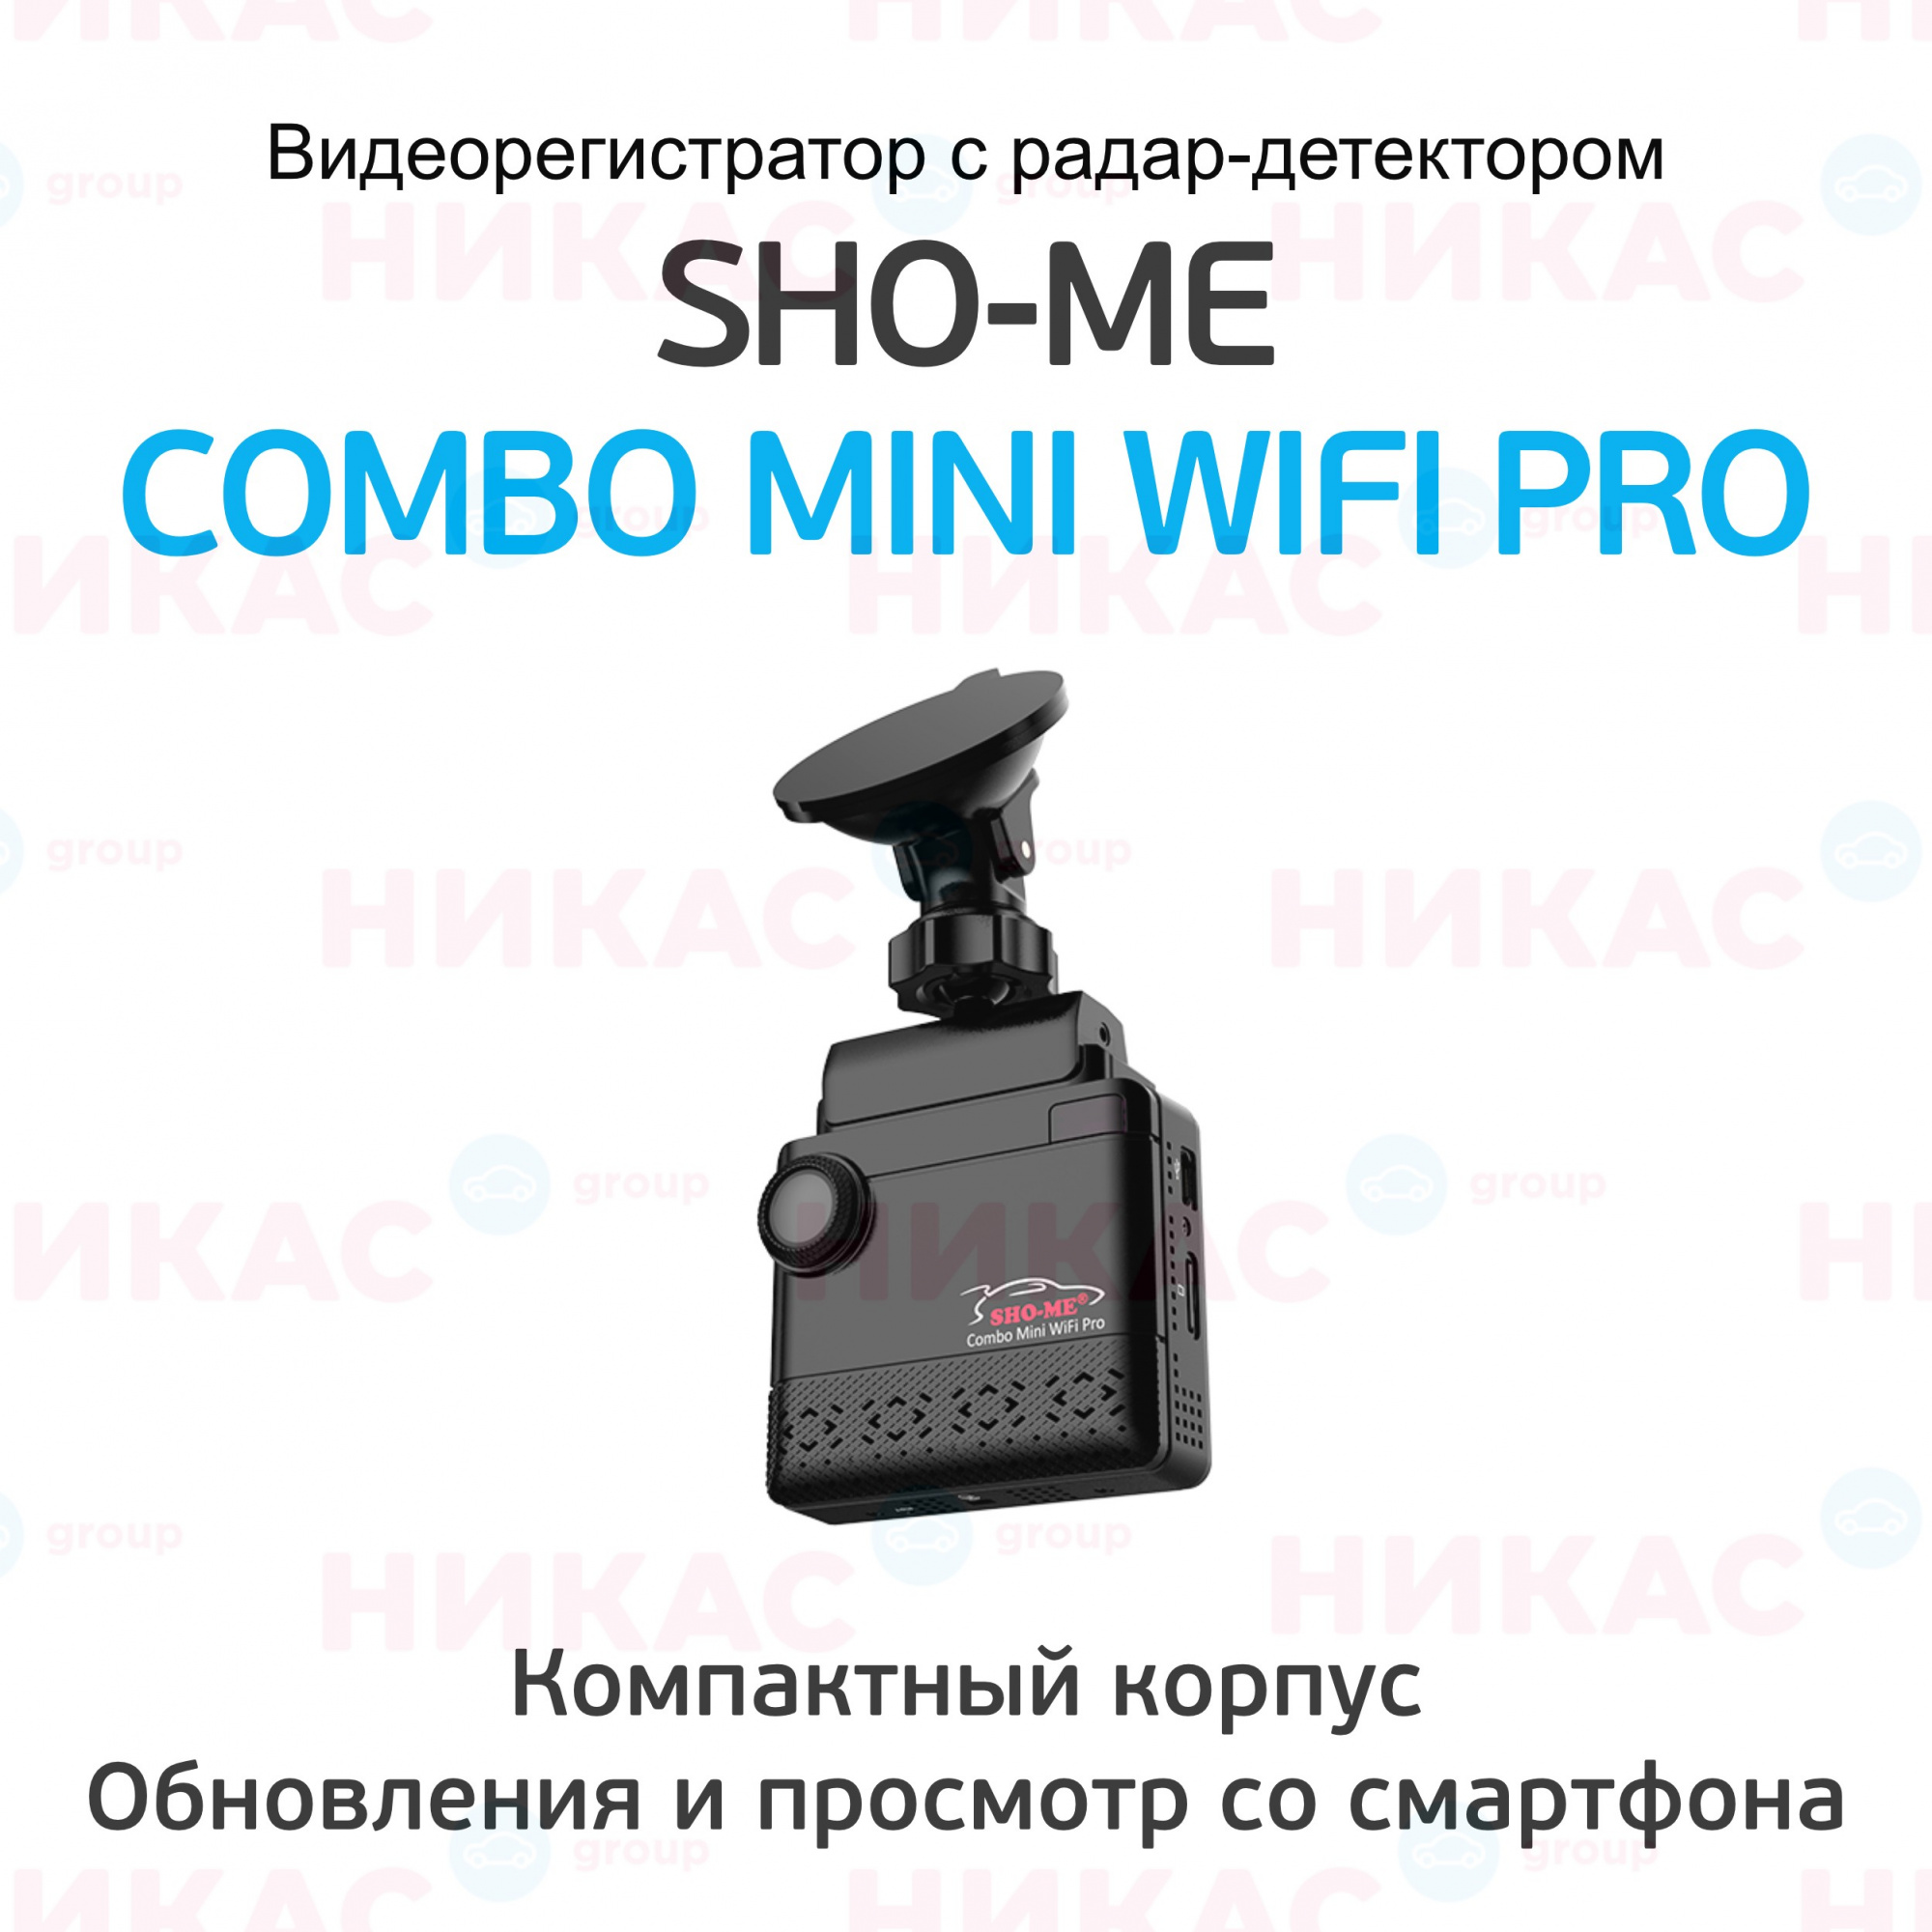 Sho-me Combo Mini. Sho-me Combo Mini WIFI. Sho-me Combo Mini WIFI Pro. WIFI Sho-me Combo Vision Pro. Sho me combo wi fi